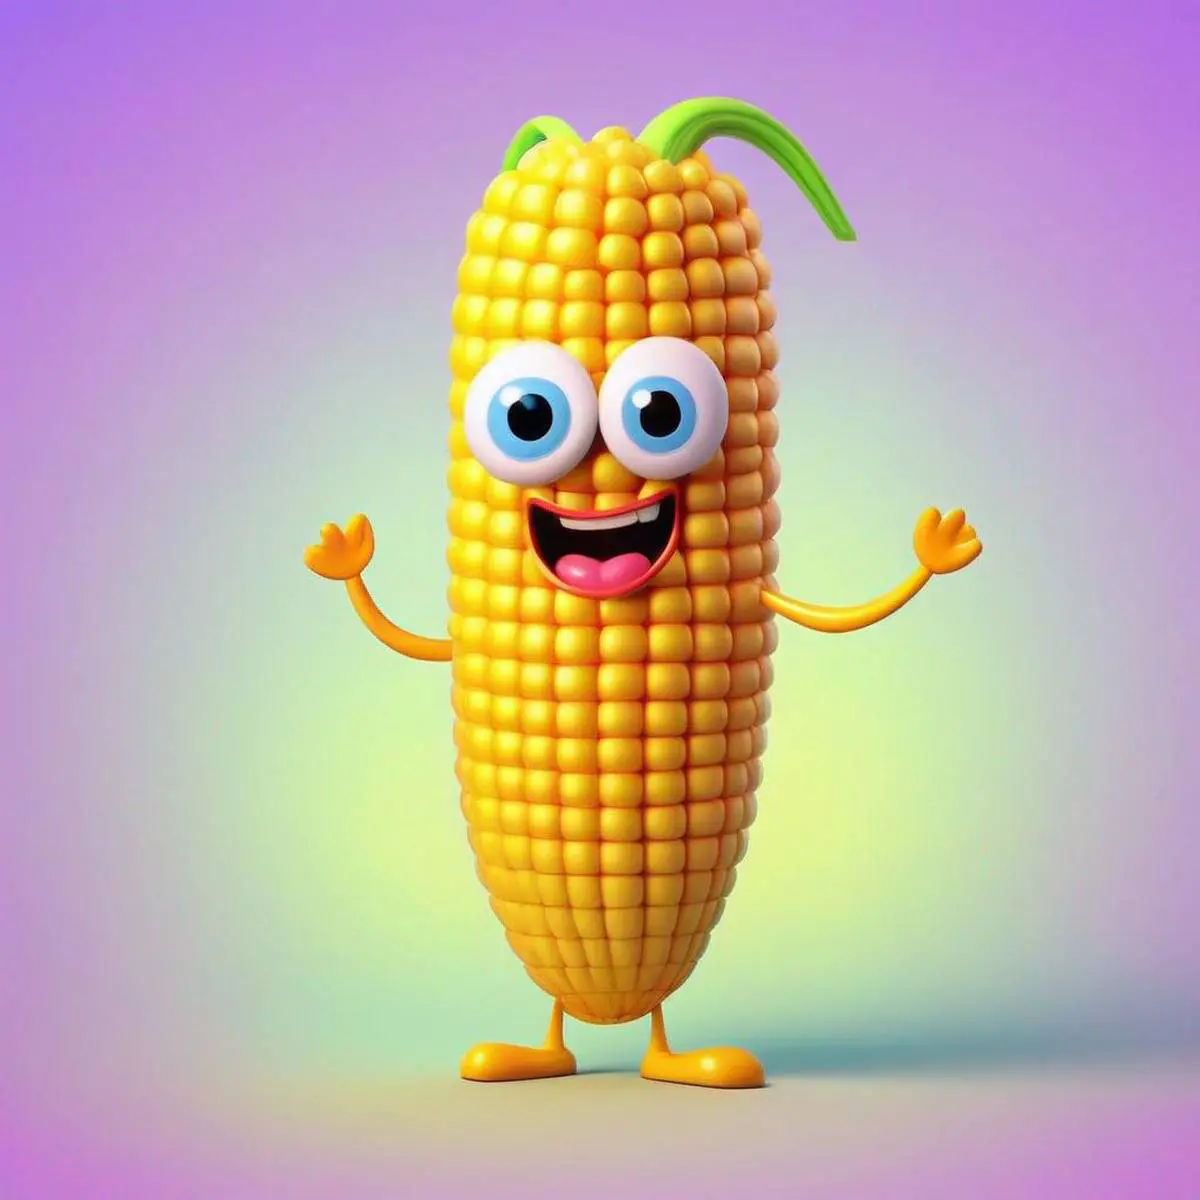 Corny puns